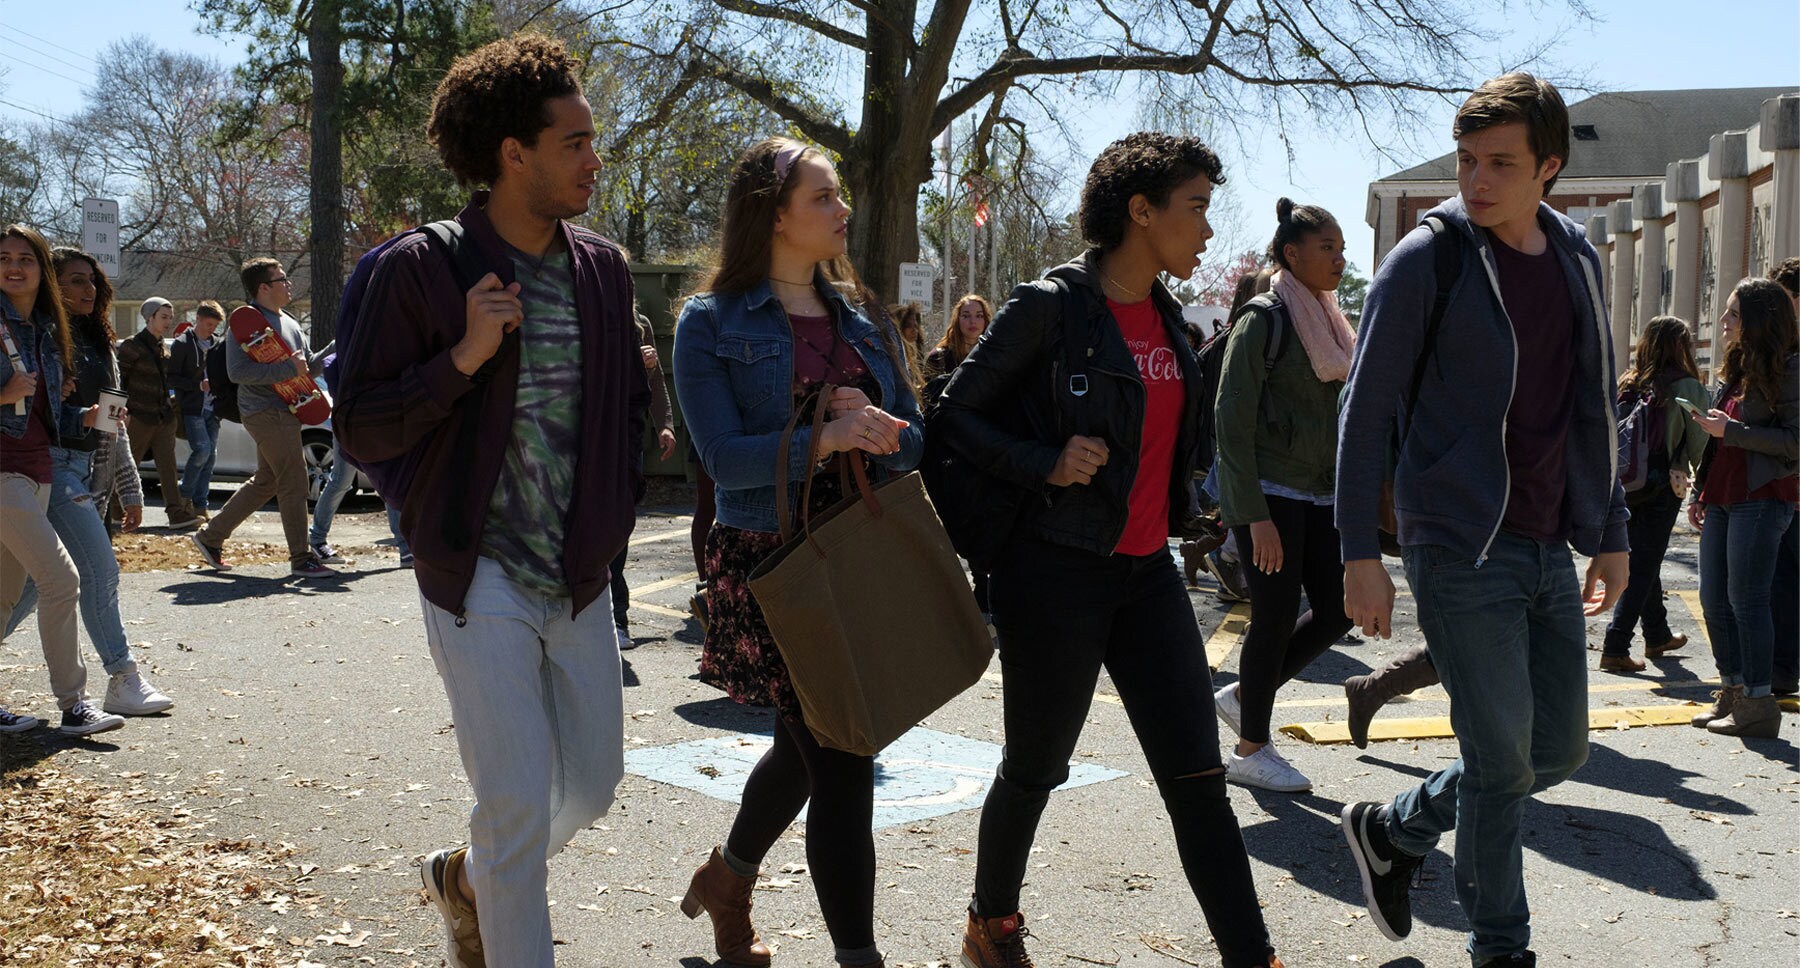 Alexandra Shipp (as Abby), Nick Robinson (as Simon), Jorge Lendeborg Jr. (as Nick),and Katherine Langford (as Leah) walking to school in "Love, Simon"